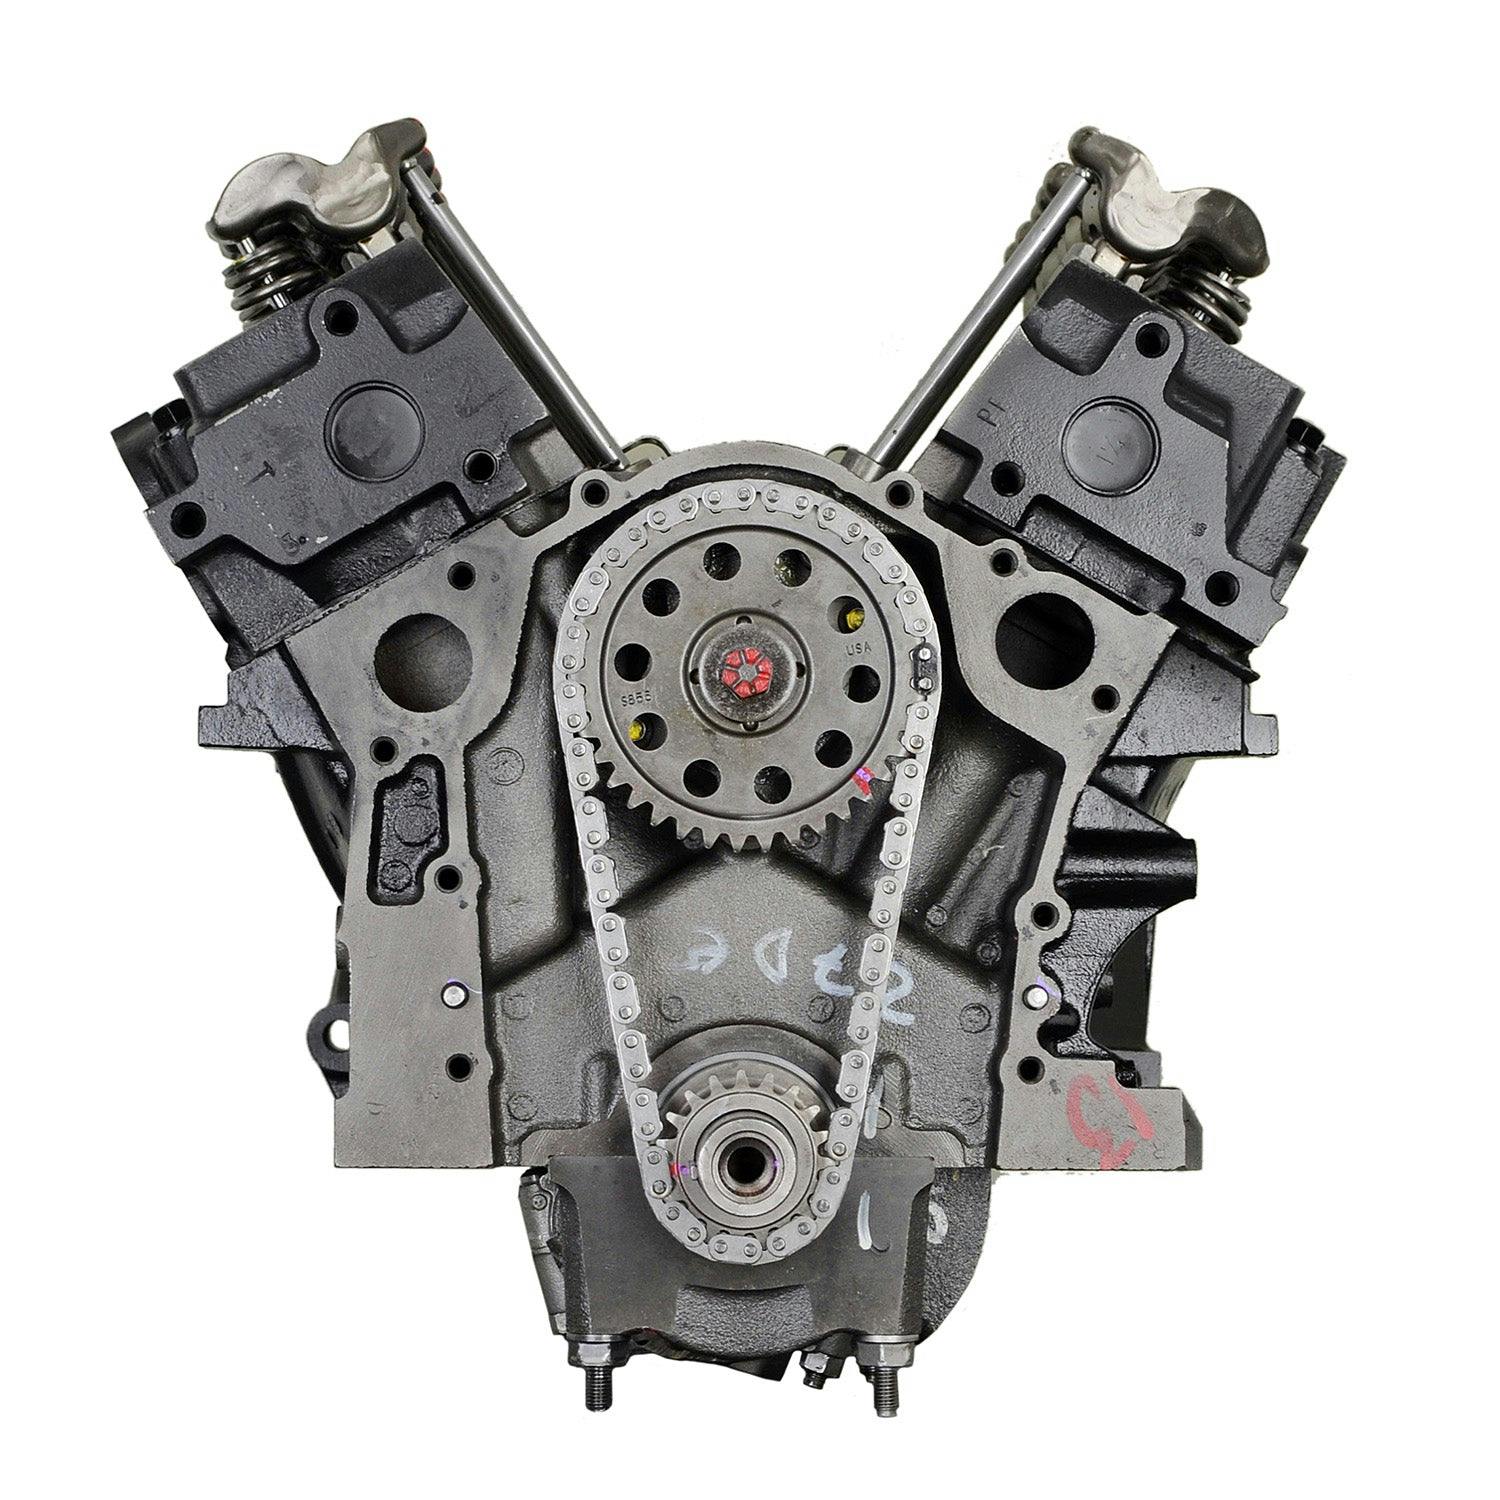 3L V6 Engine for 2002-2007 Ford Taurus/Mercury Sable